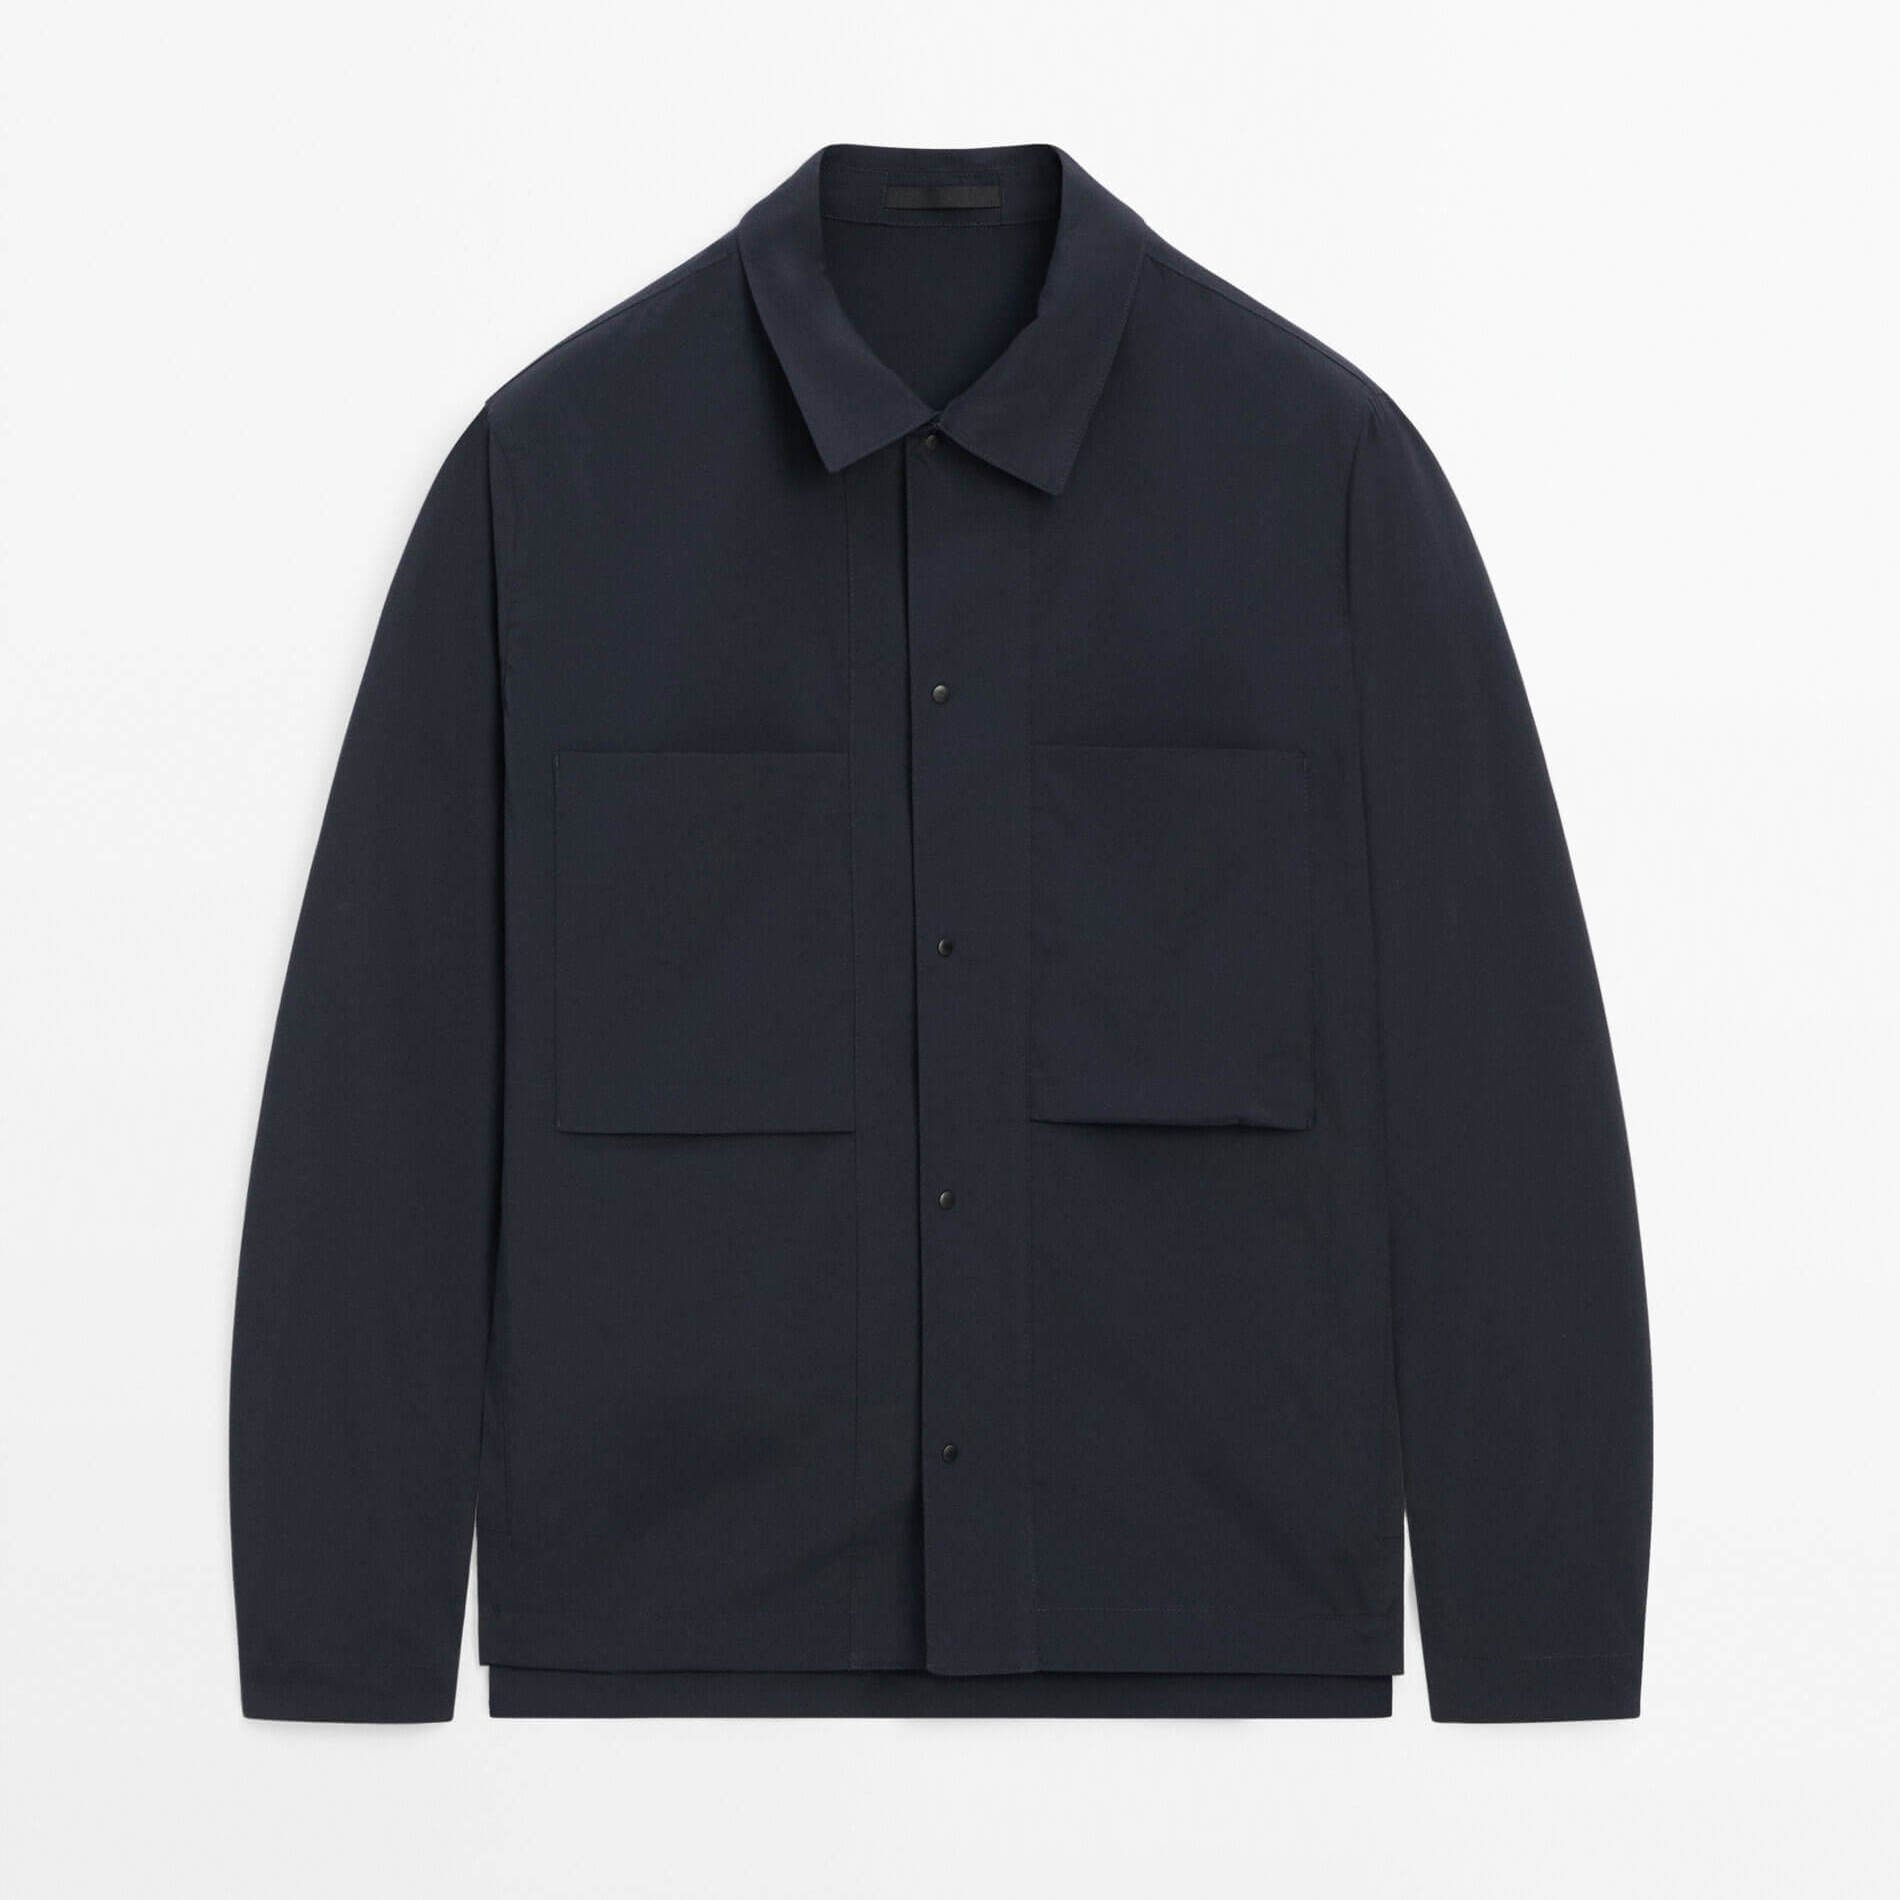 Куртка-рубашка Massimo Dutti With Chest Pockets Studio, темно-синий куртка рубашка massimo dutti zip up with chest pockets хаки